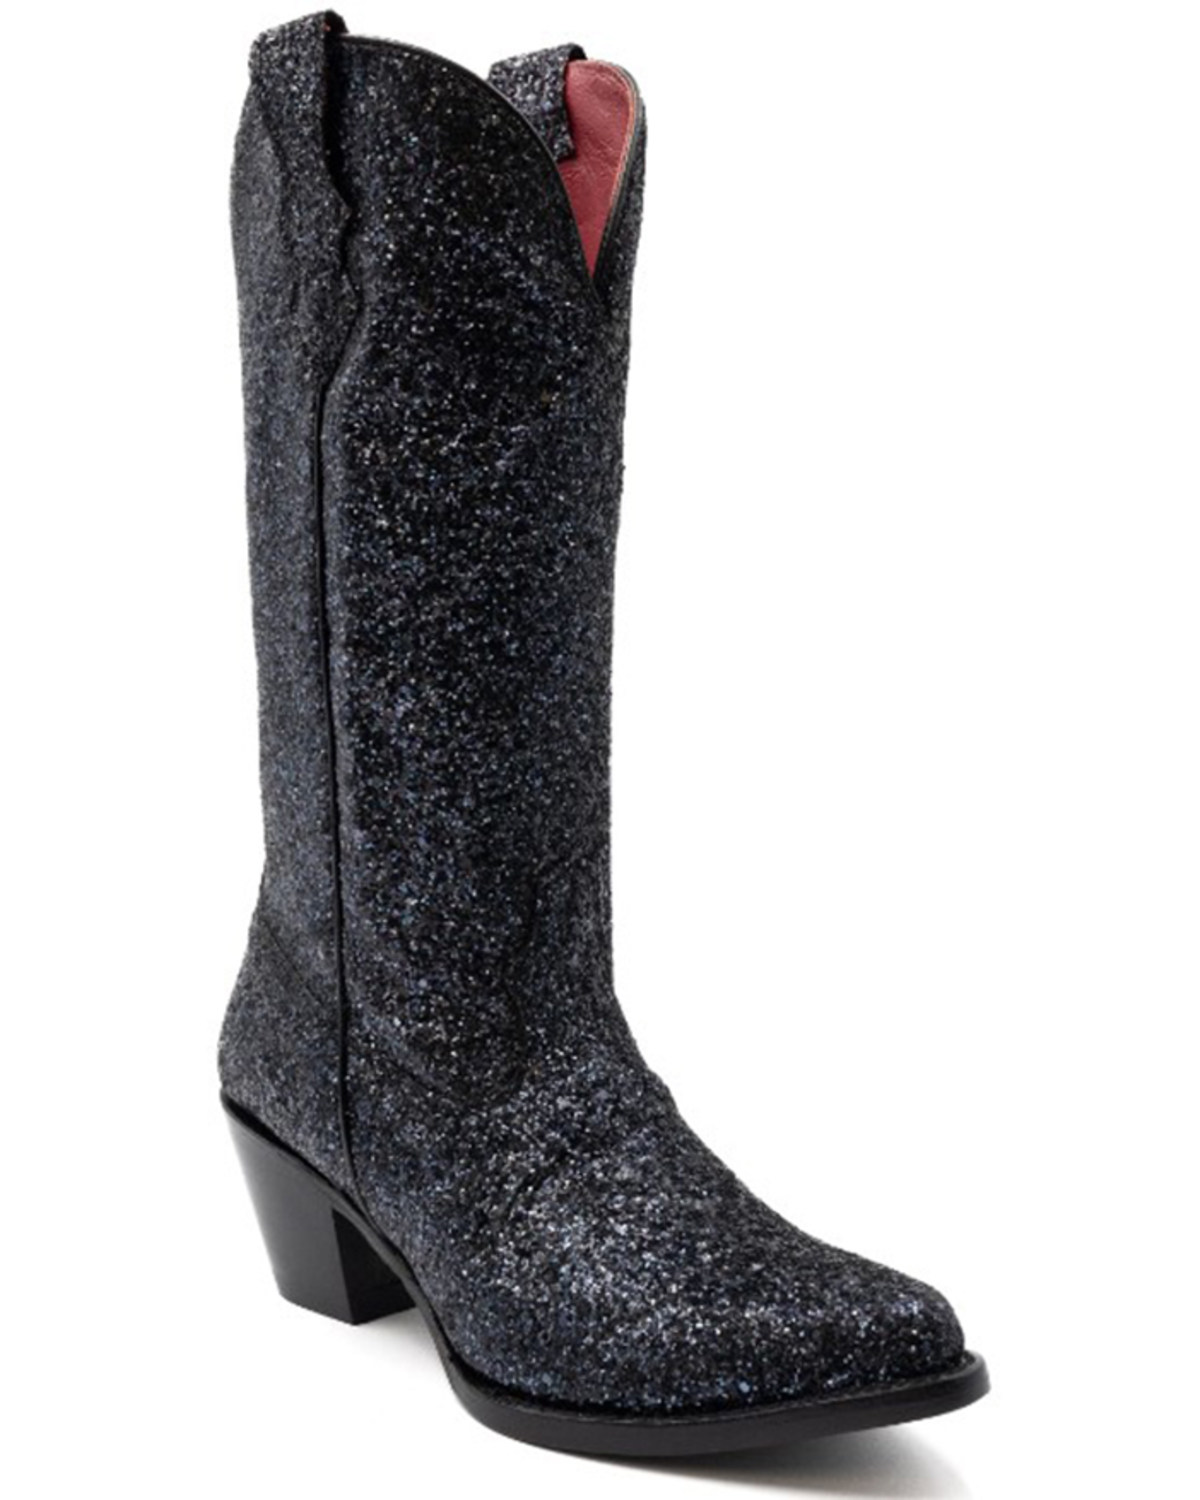 Ferrini Women's Dazzle Western Boots - Pointed Toe